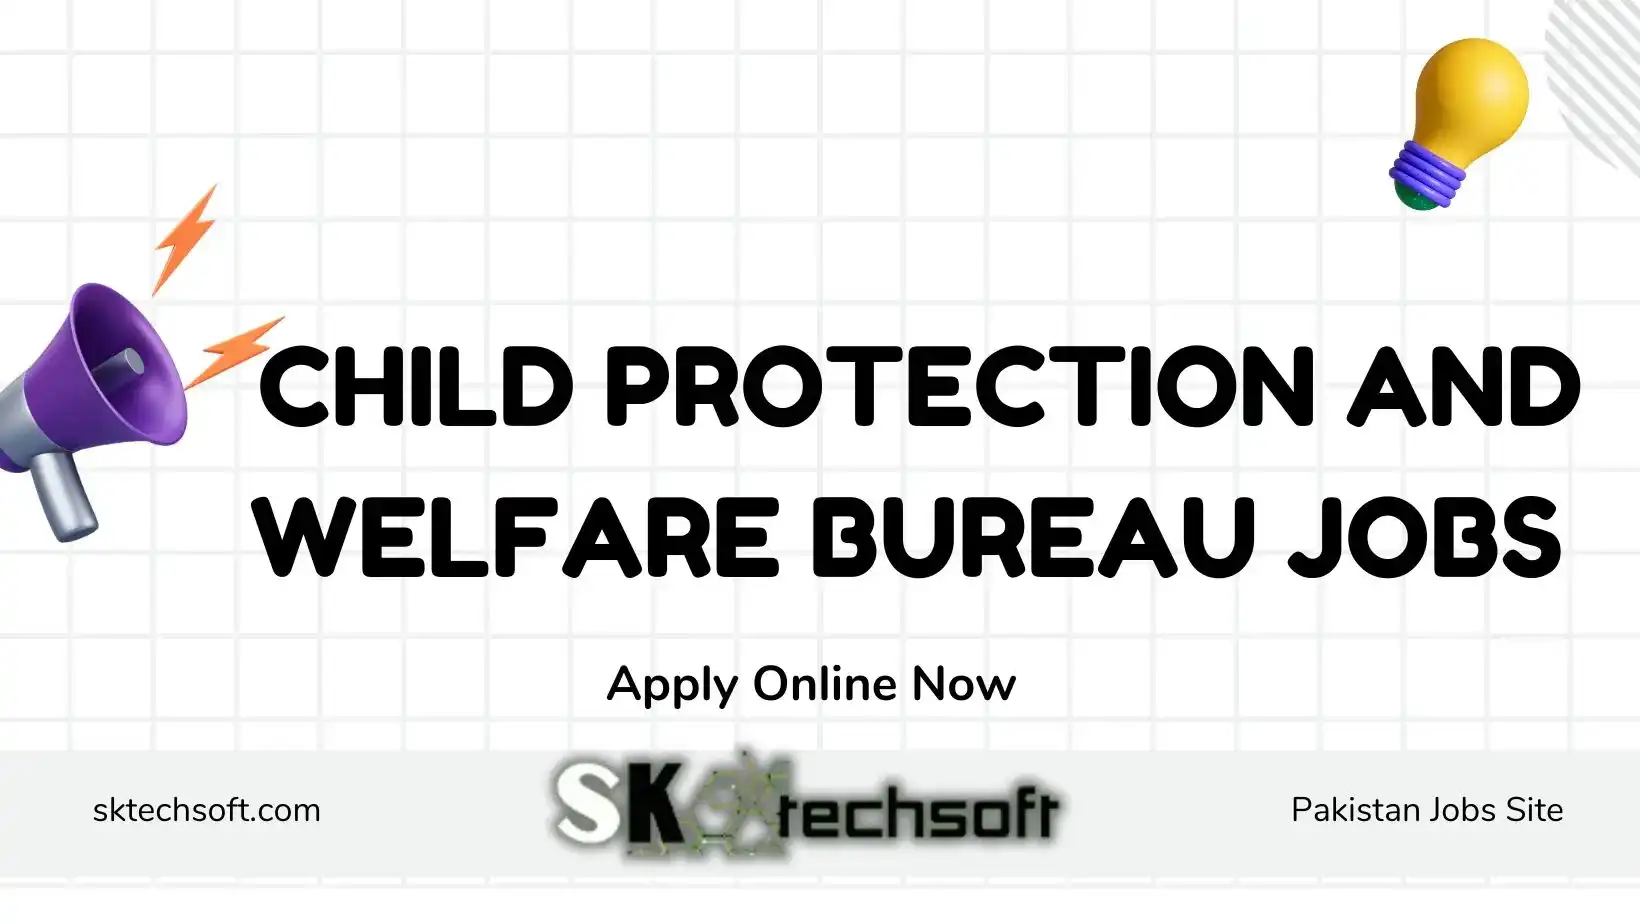 Child Protection and Welfare Bureau Jobs